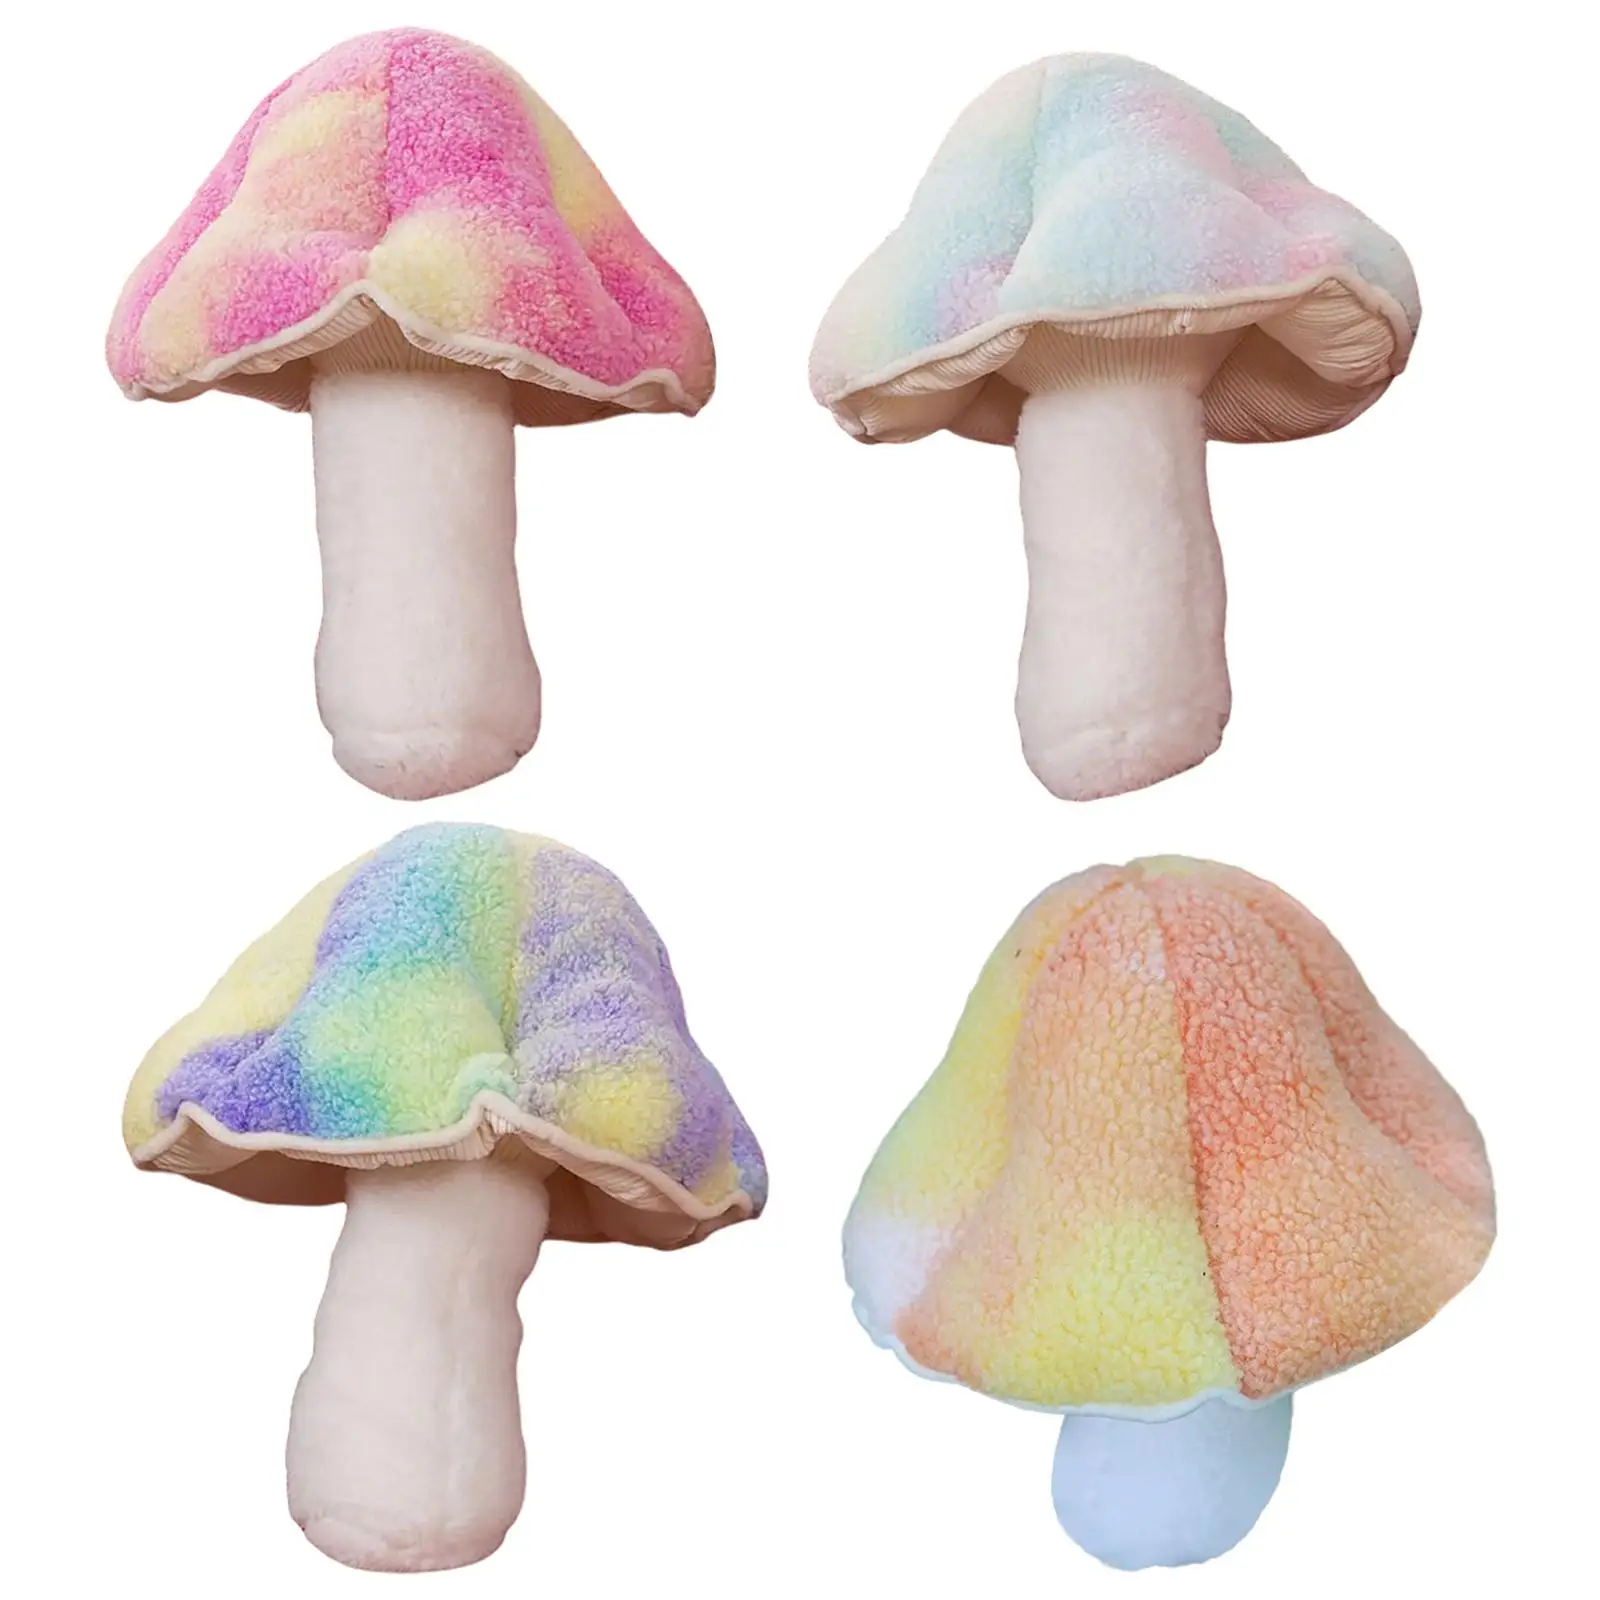 Kawaii Mushroom Shaped Stuffed  for Kids Girlfriend Bedtime Gifts